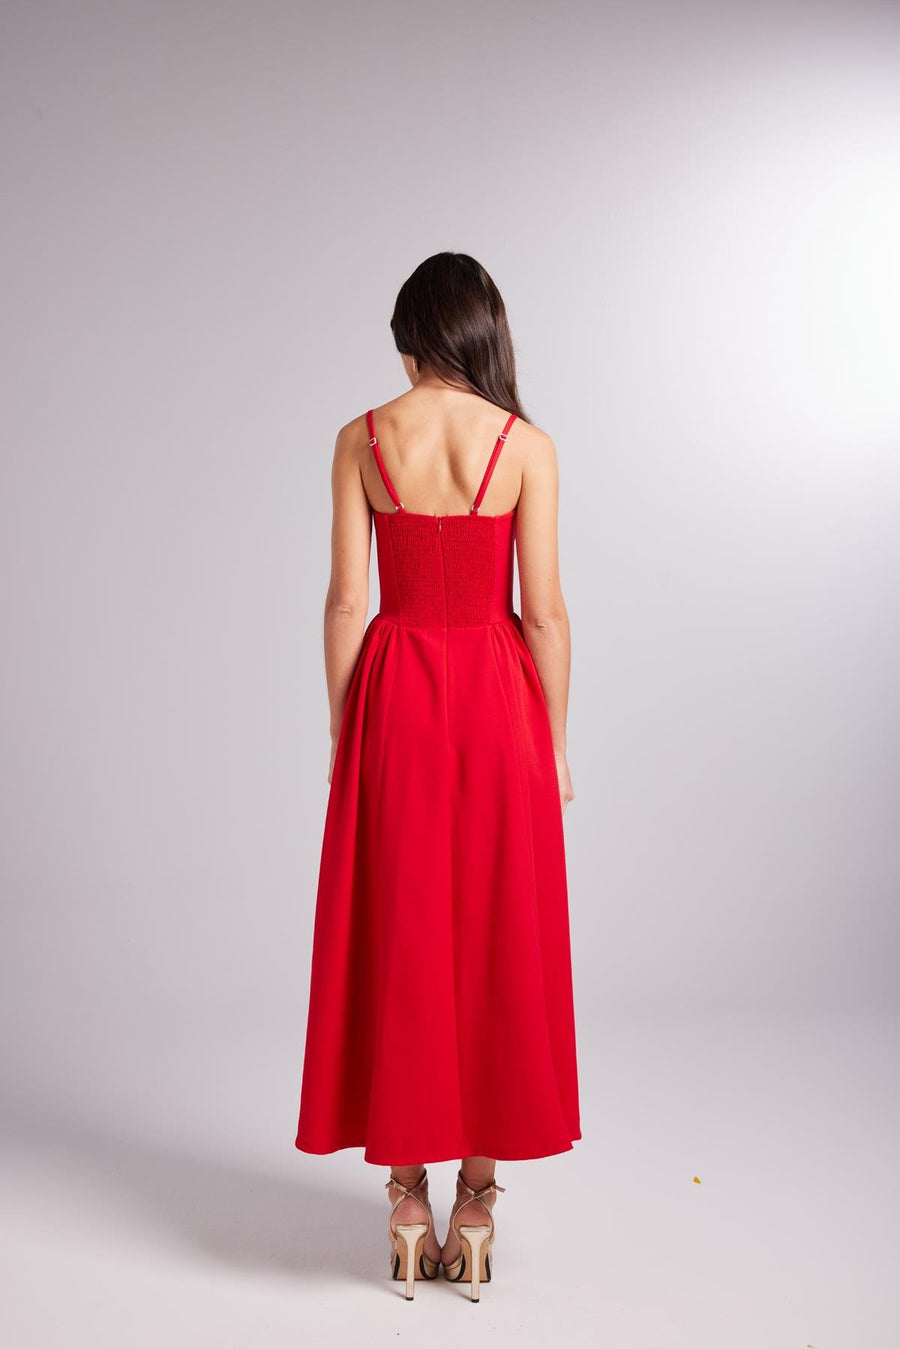 Bridged Dress Red Porterist - 7